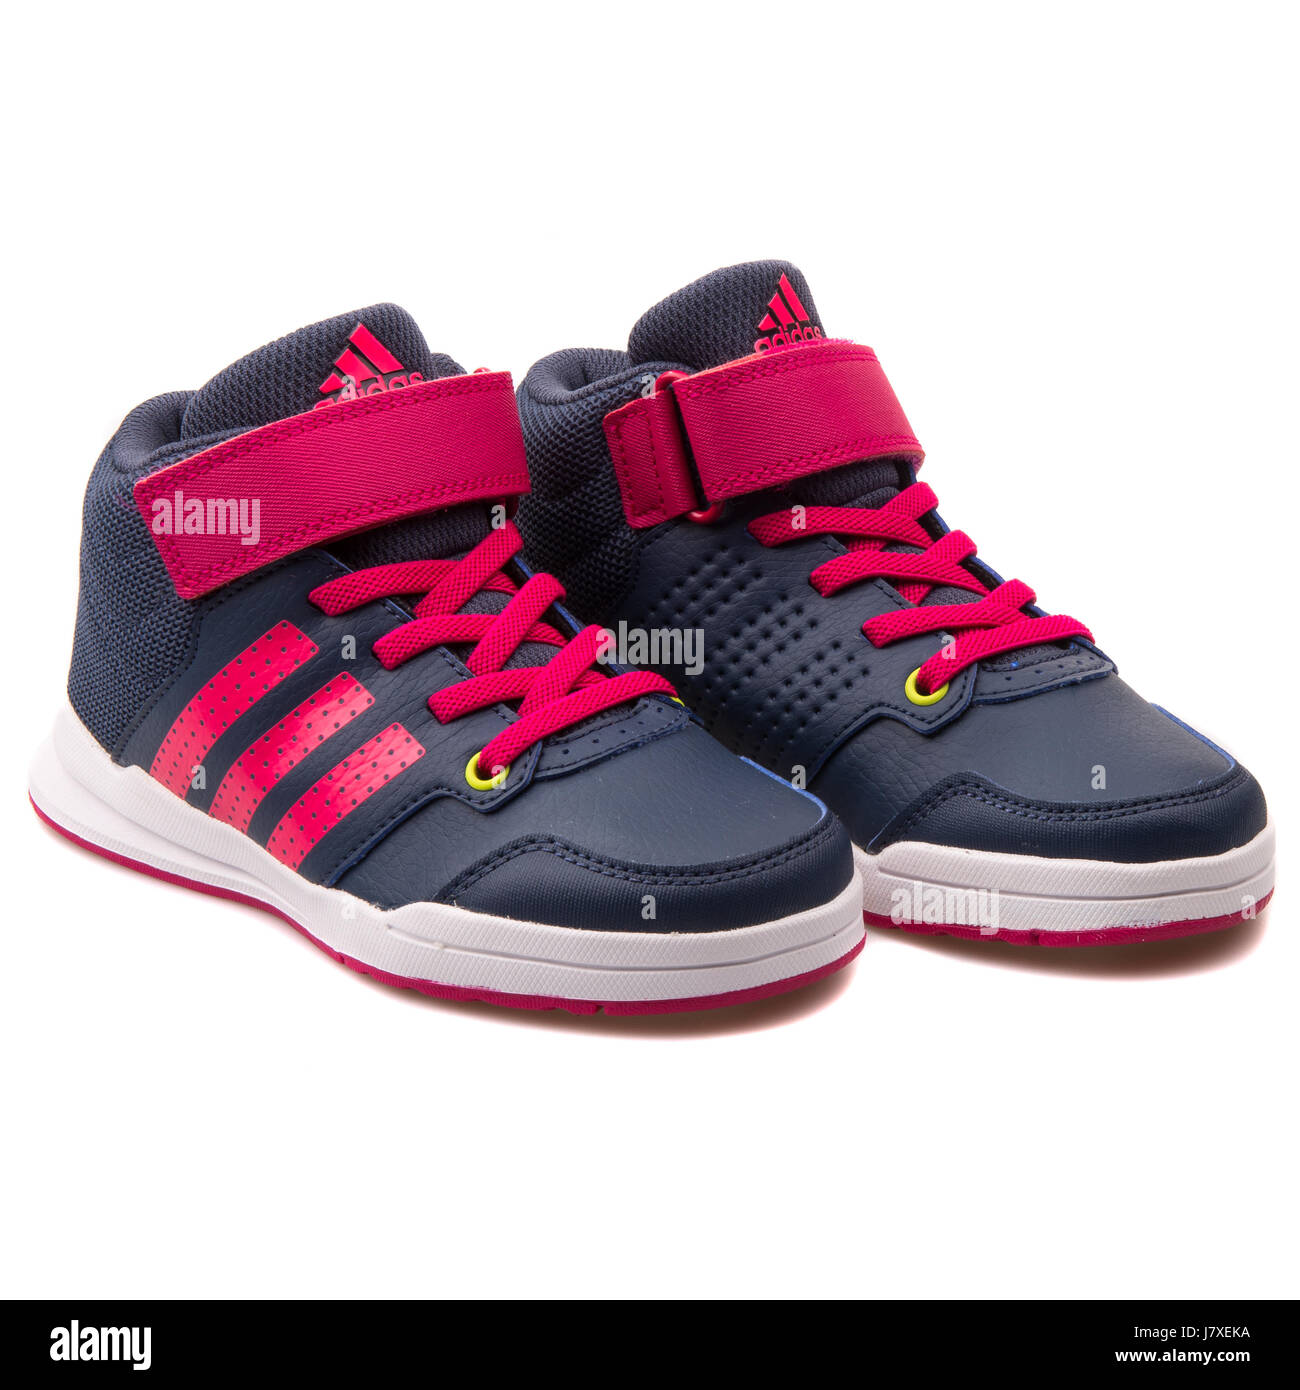 Supply saw kitten Adidas Jan BS 2 mid C Kids Dark Blue Sneakers With Three Pink Stripes -  B23908 Stock Photo - Alamy